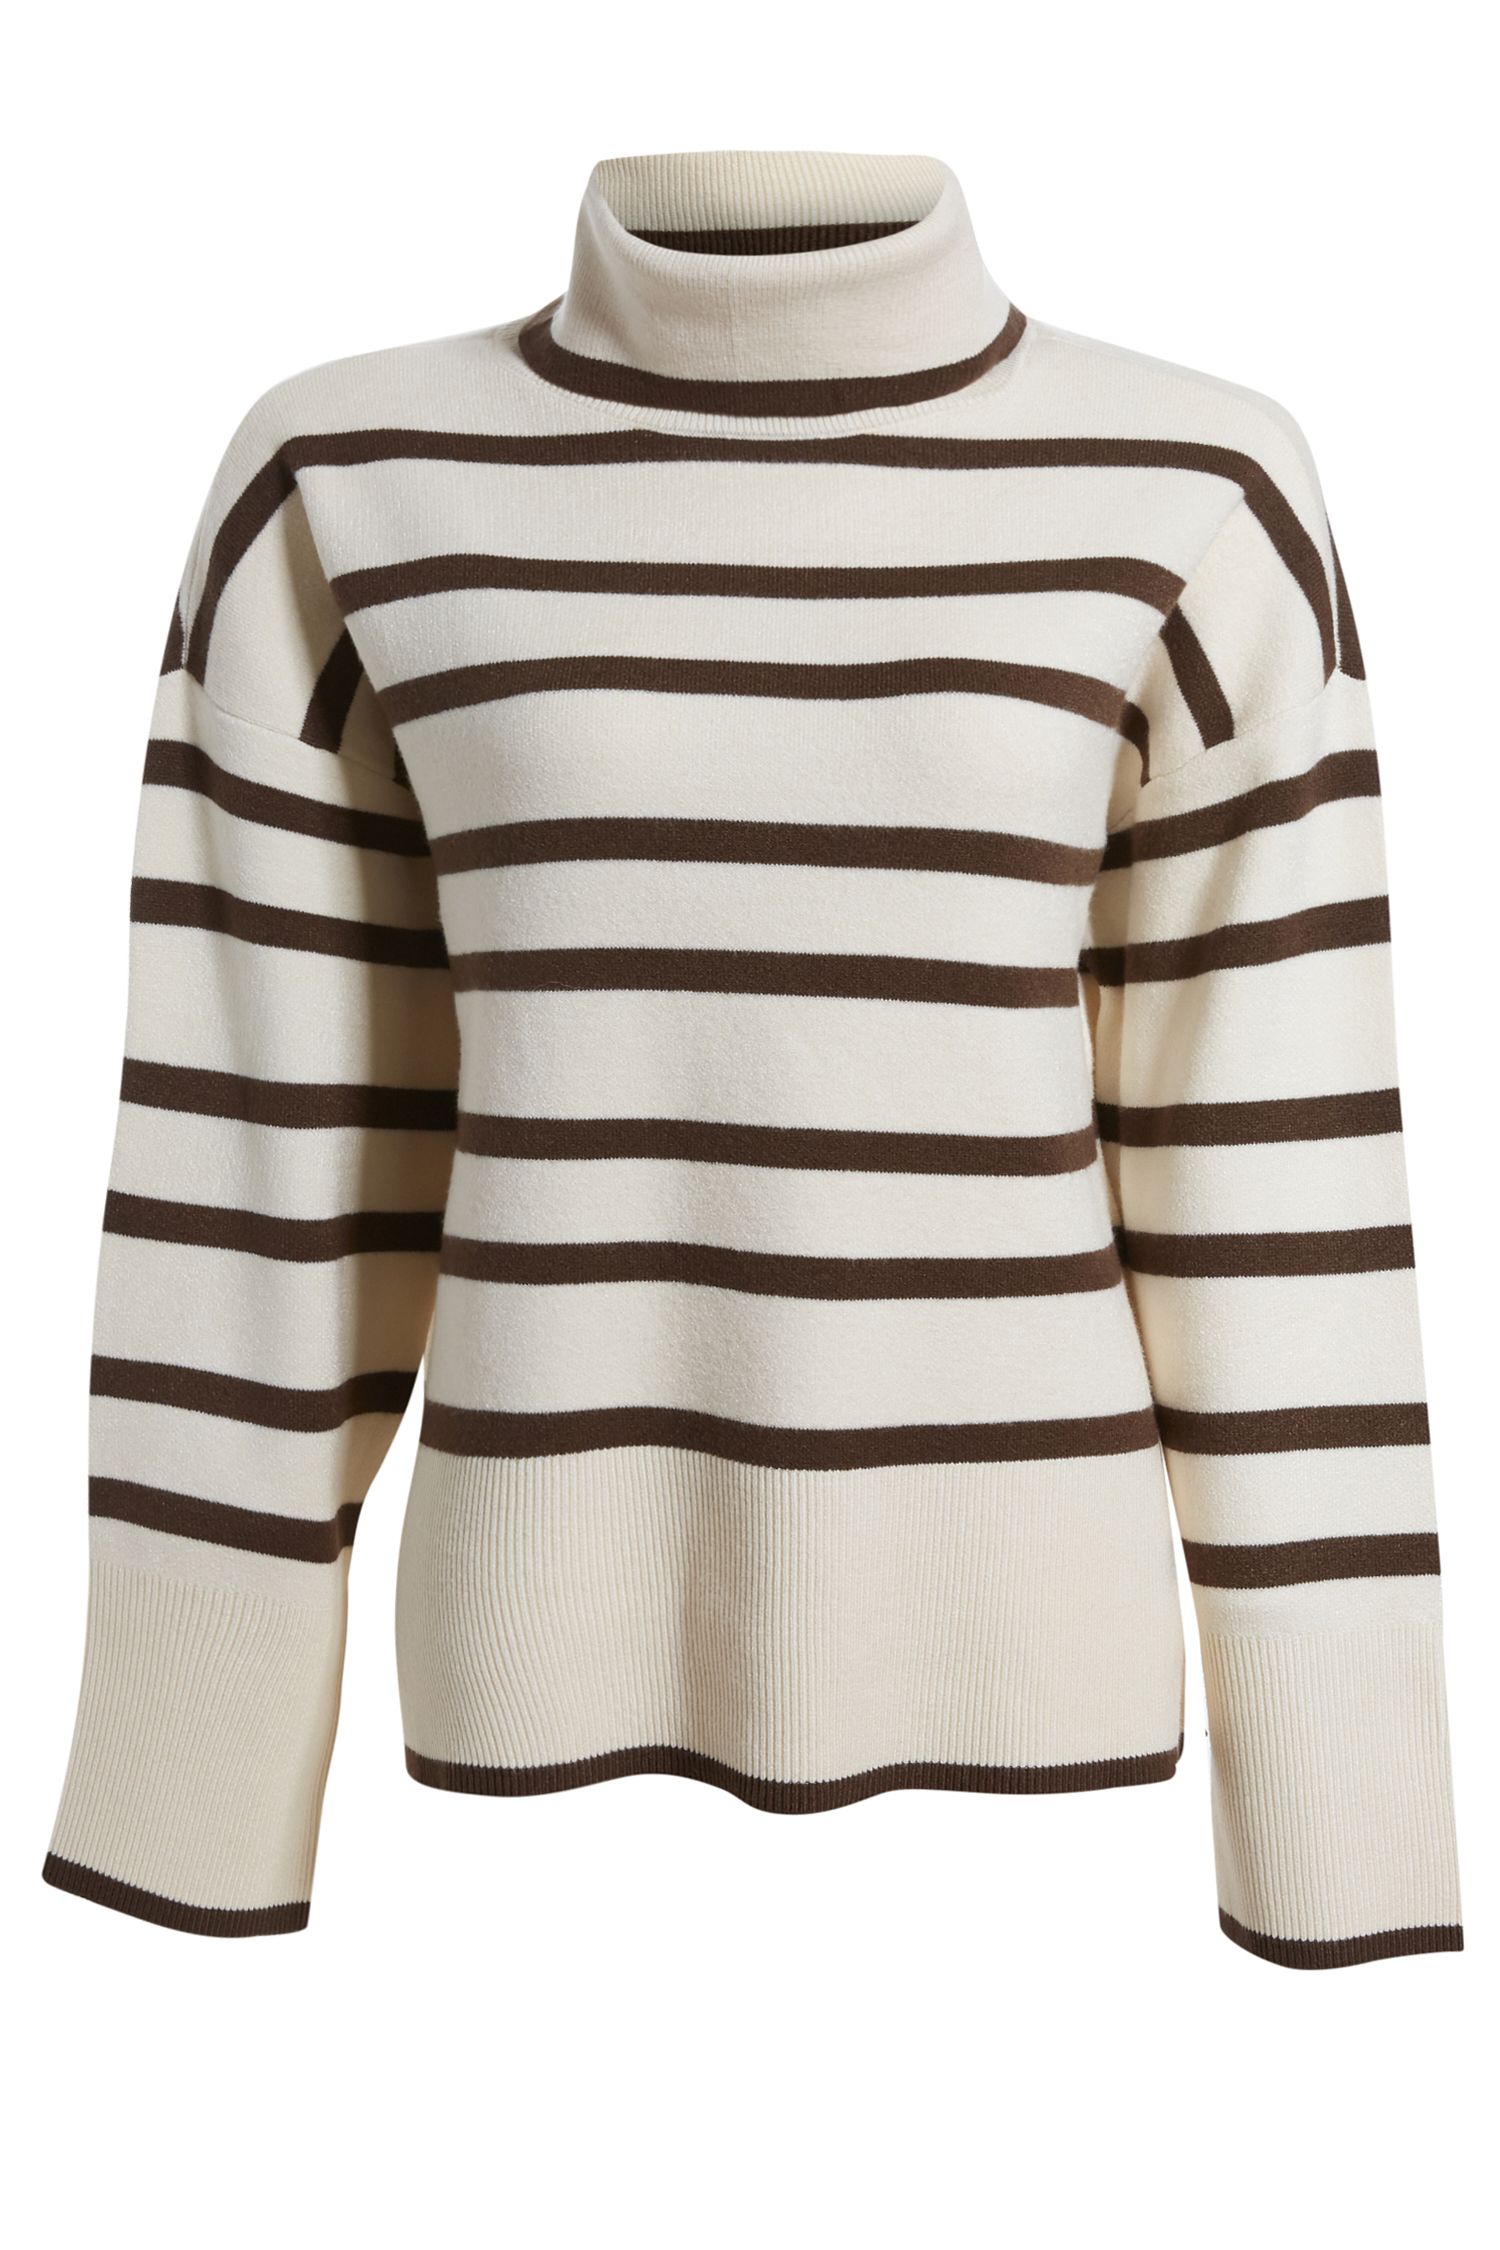 Vero Moda Stripe Turtleneck Sweater in Ivory XS - XL | DAILYLOOK